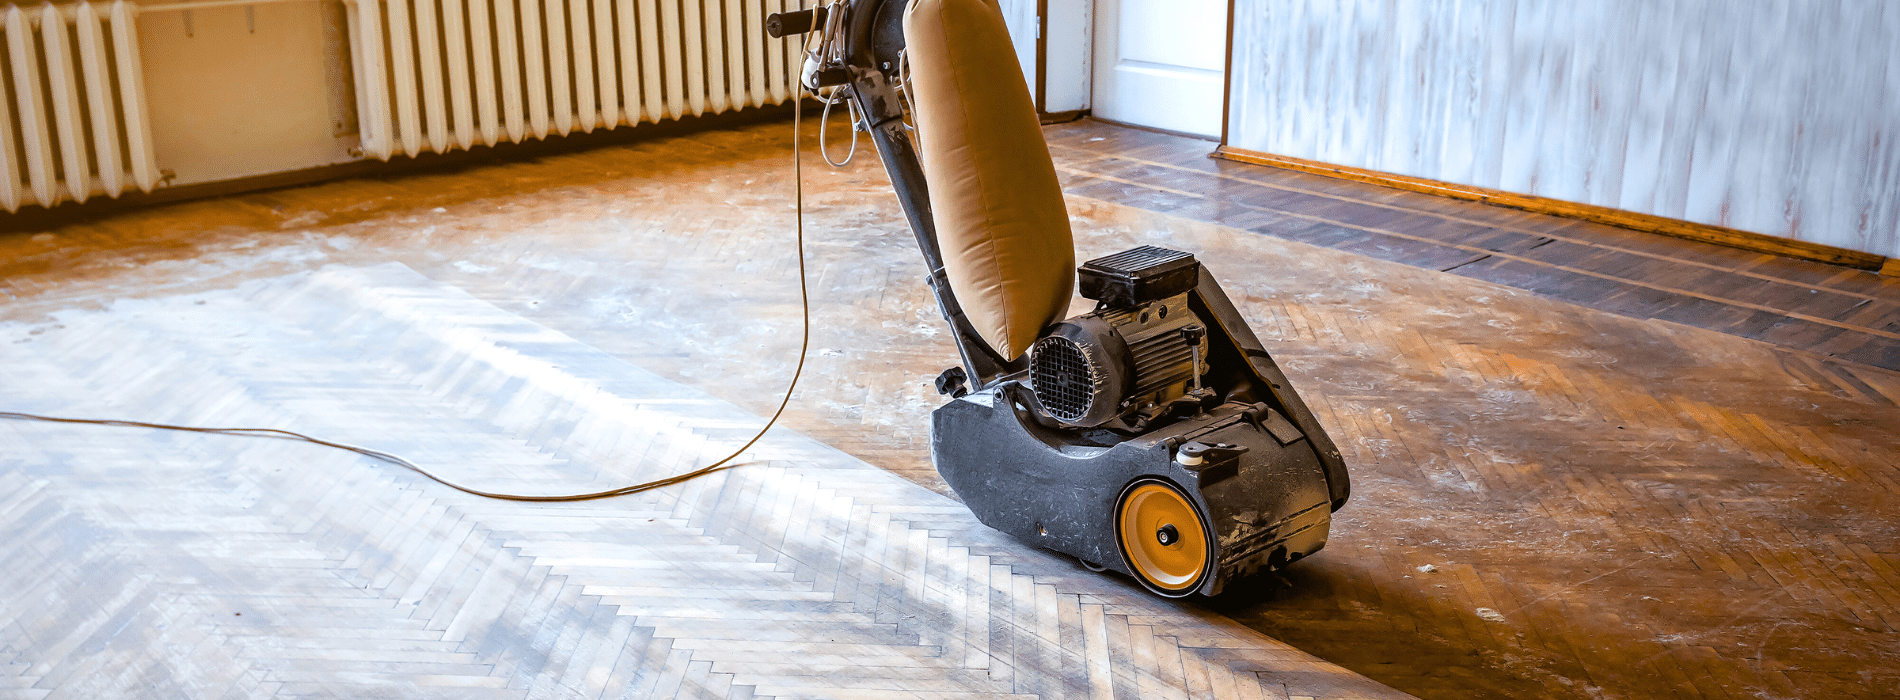 In Euston, WC1, Mr Sander® sanding hardwood floor with Bona Scorpion (200mm, 1.5kW, 240V, 50Hz) drum sander, connected to HEPA-filtered dust extraction for clean & efficient results.